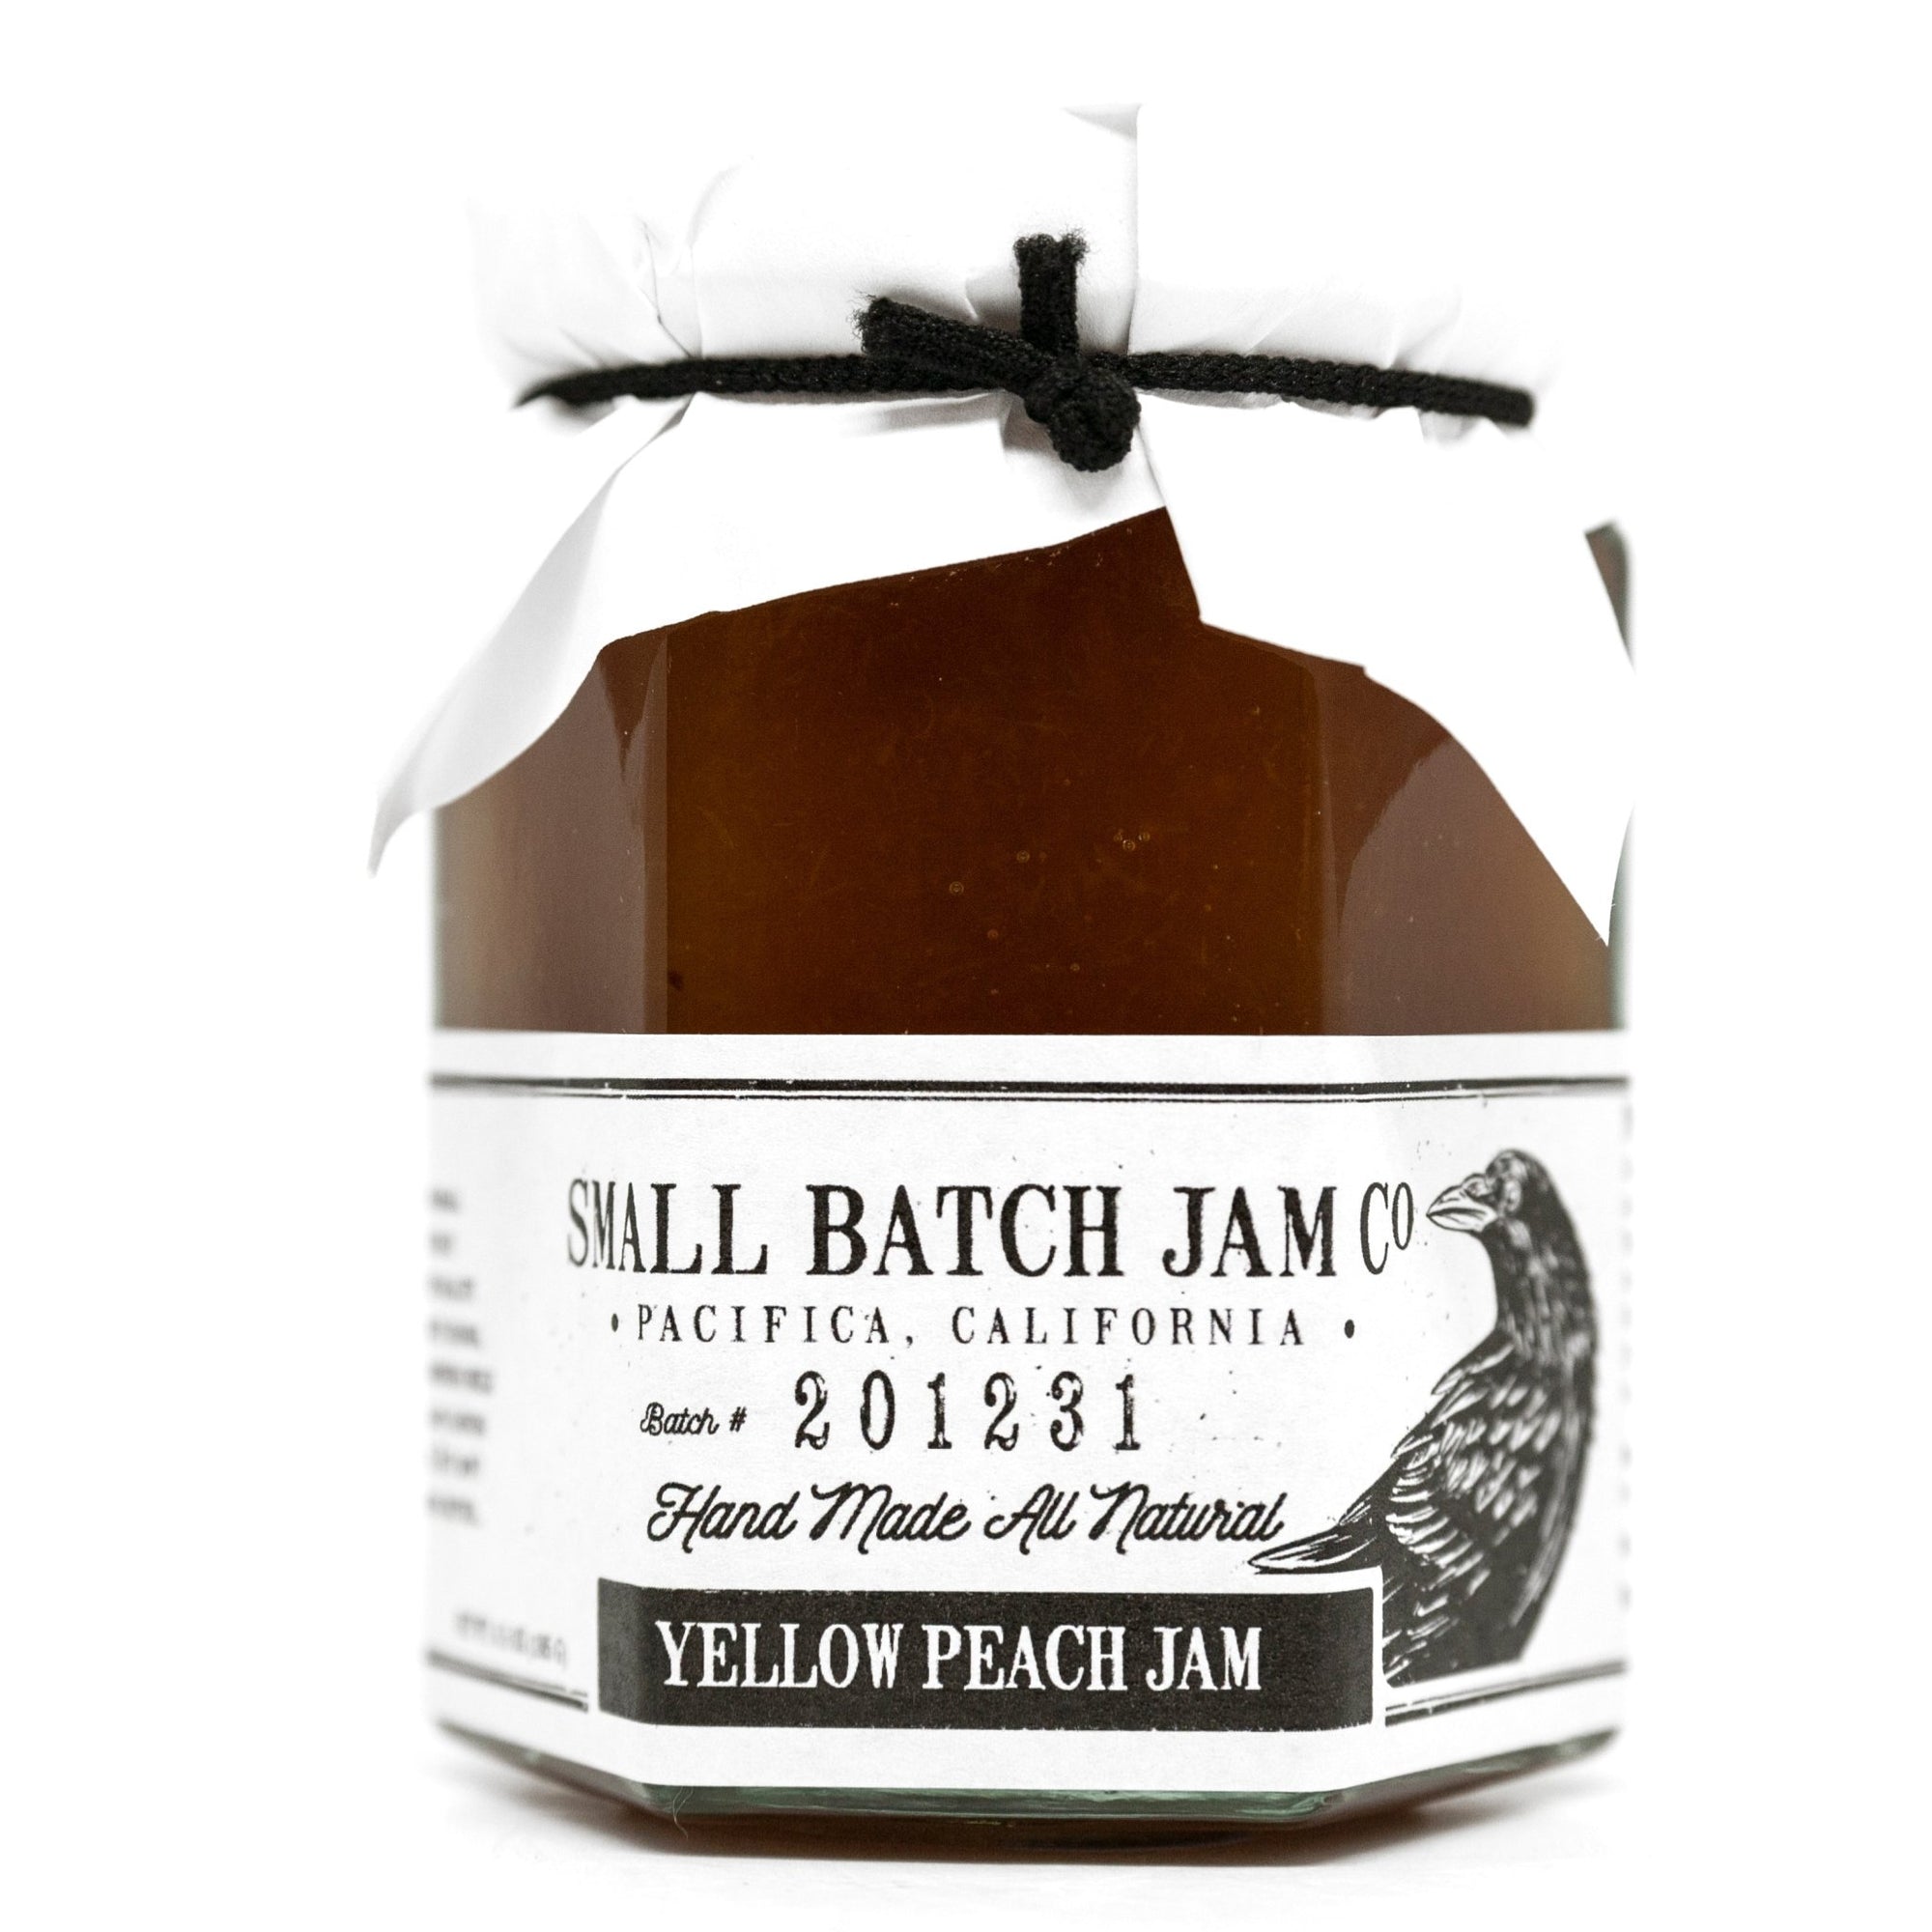 Yellow Peach Jam - Small Batch Jam Co